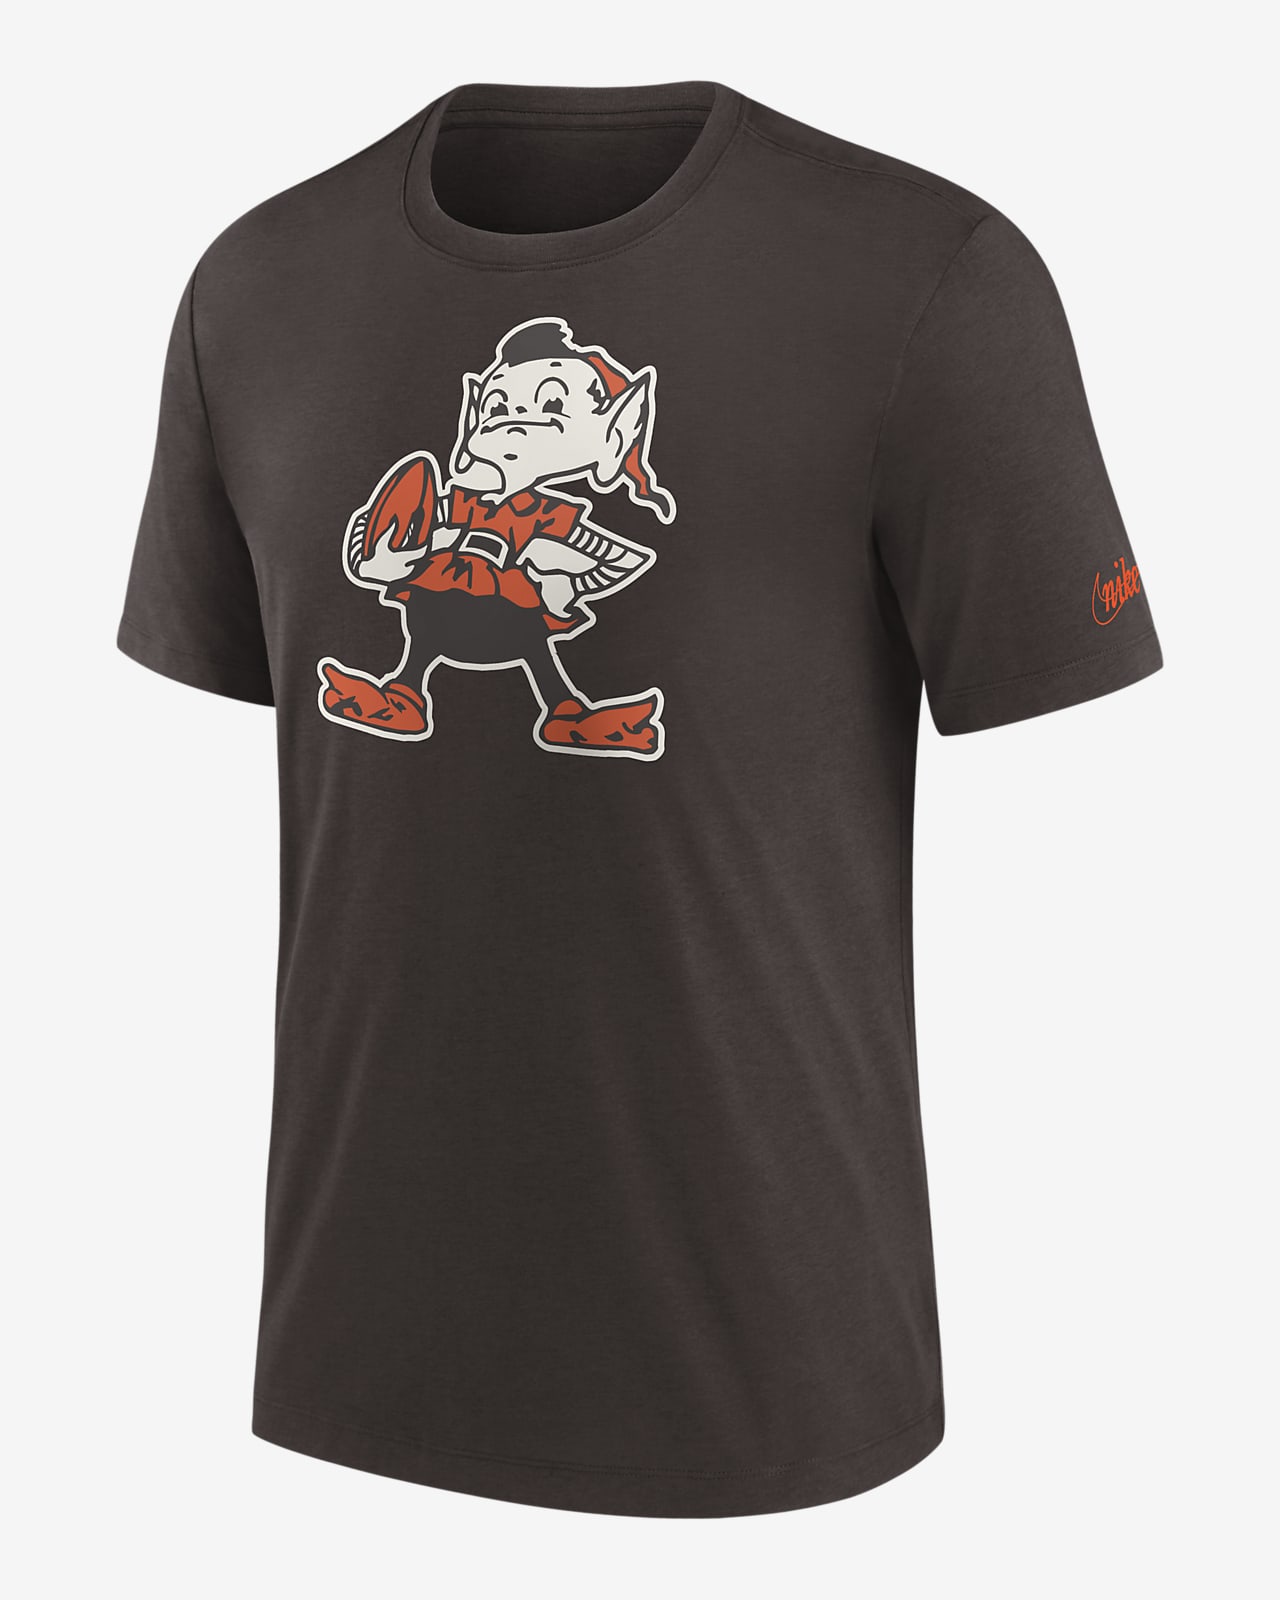 Nike Men's Cleveland Browns Rewind Logo T-Shirt - Brown - M Each